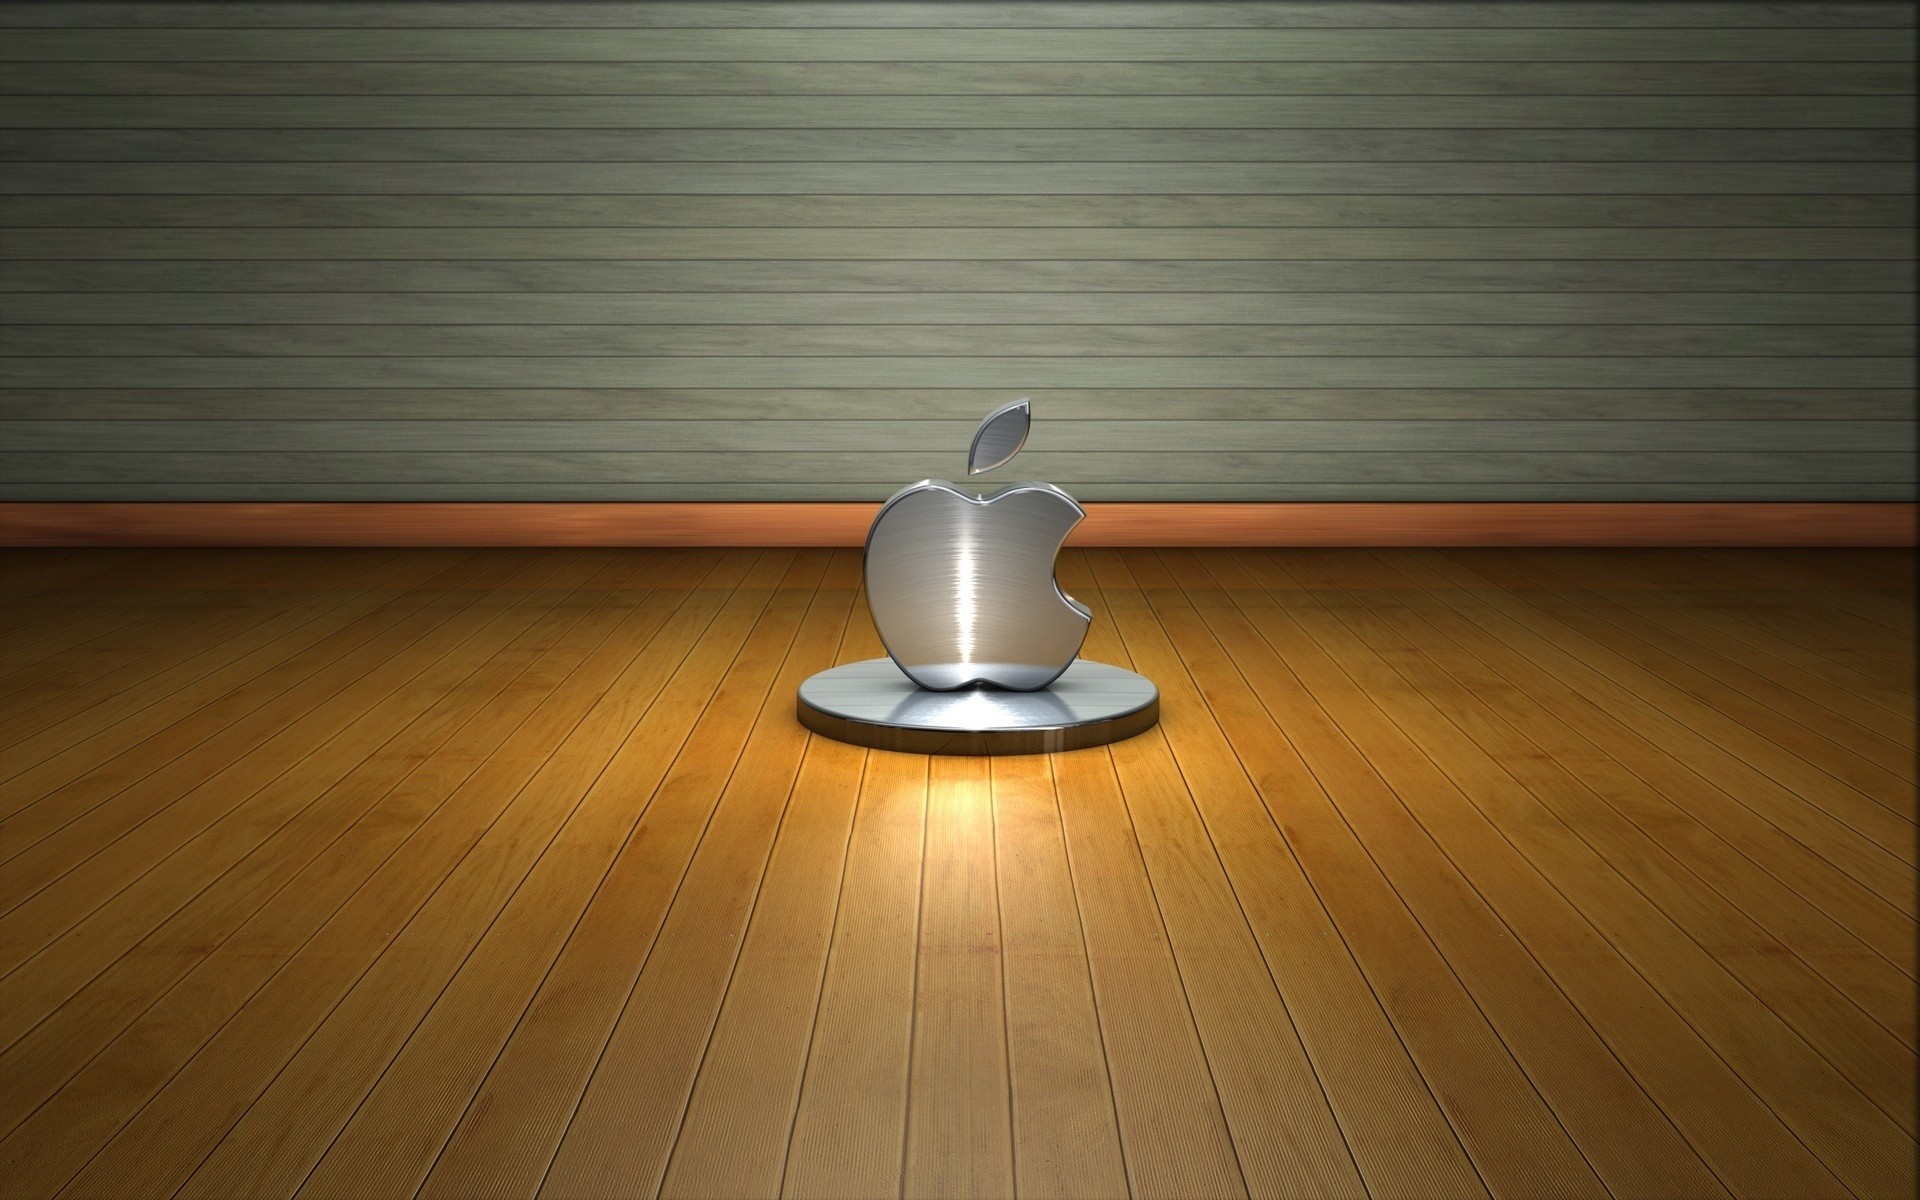 apple wood floor empty furniture inside wooden room hardwood wall parquet indoors family exhibition table board background 3d apple apple logo logo apple